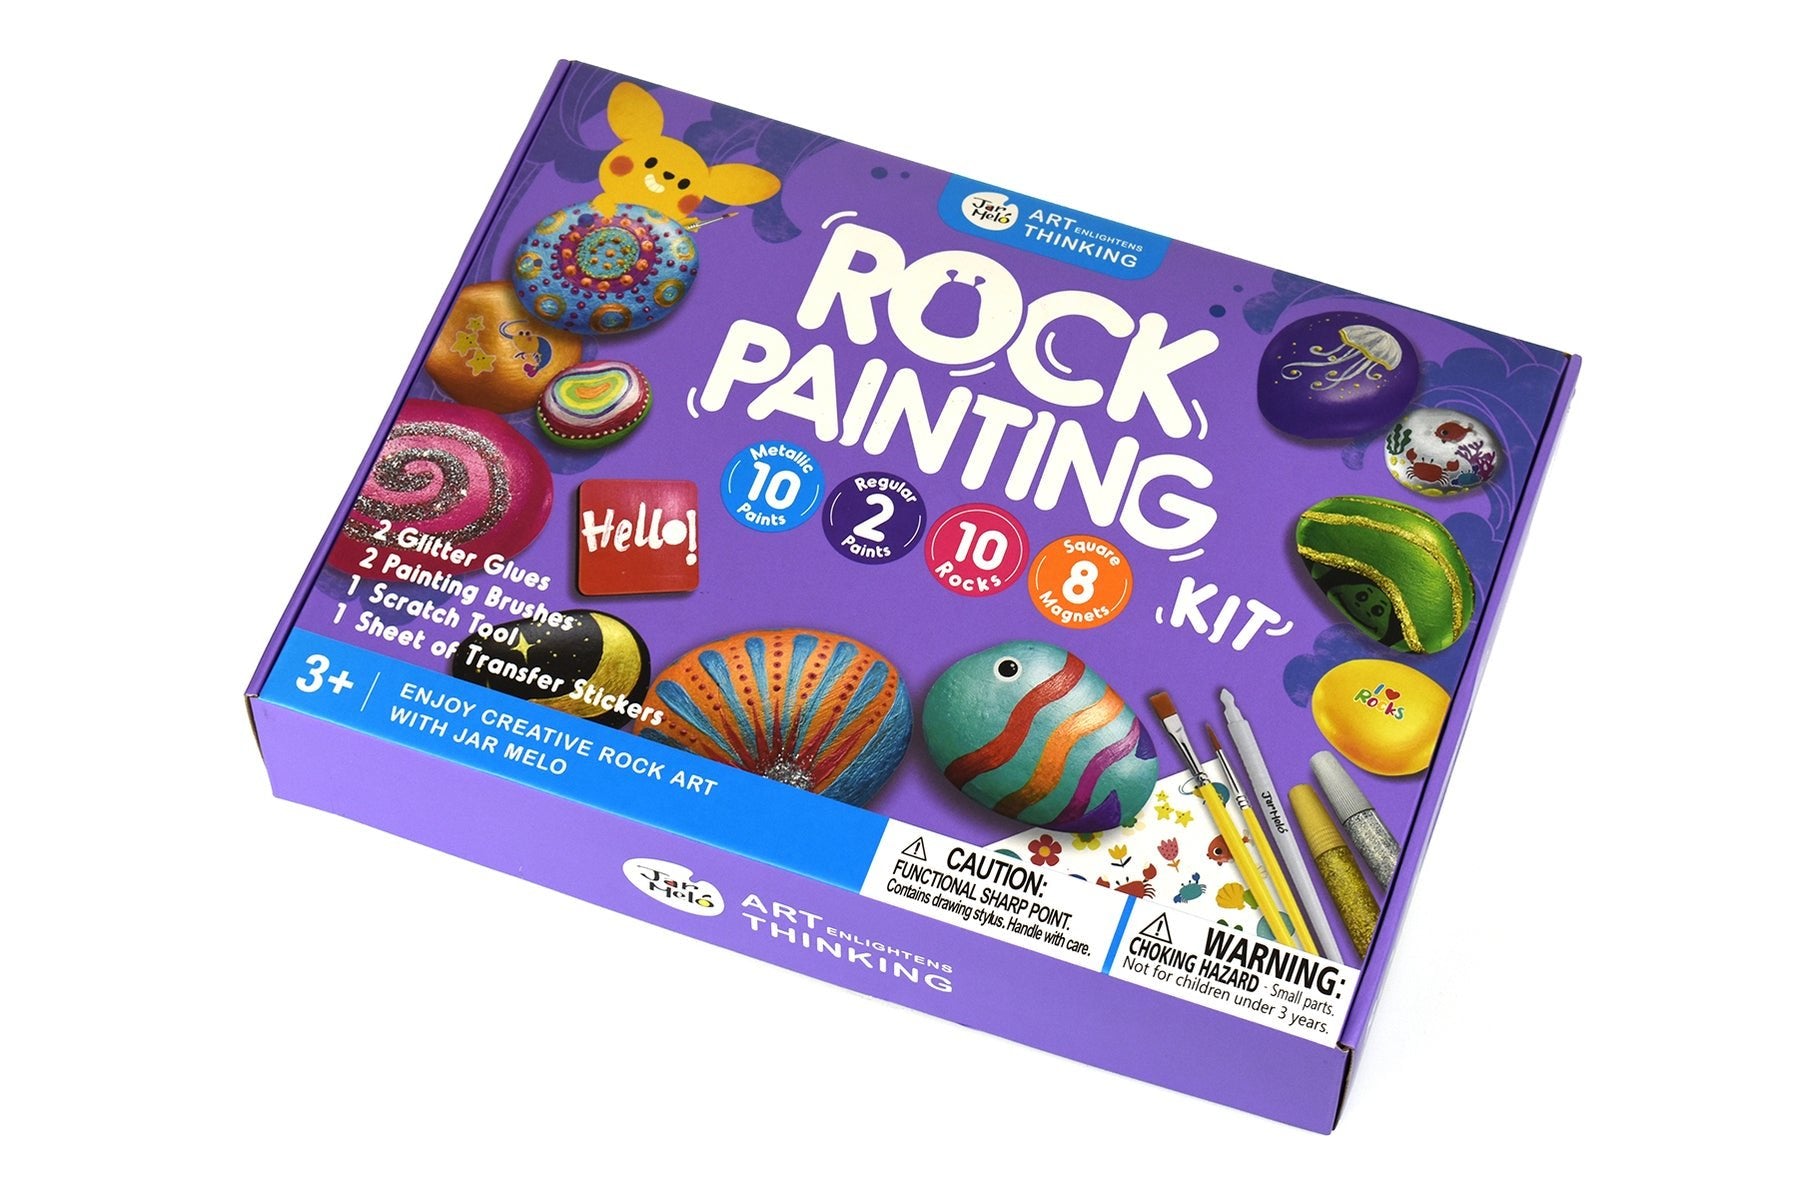 Rock Painting With Metallic Paints & Glitter Glues Craft Kit